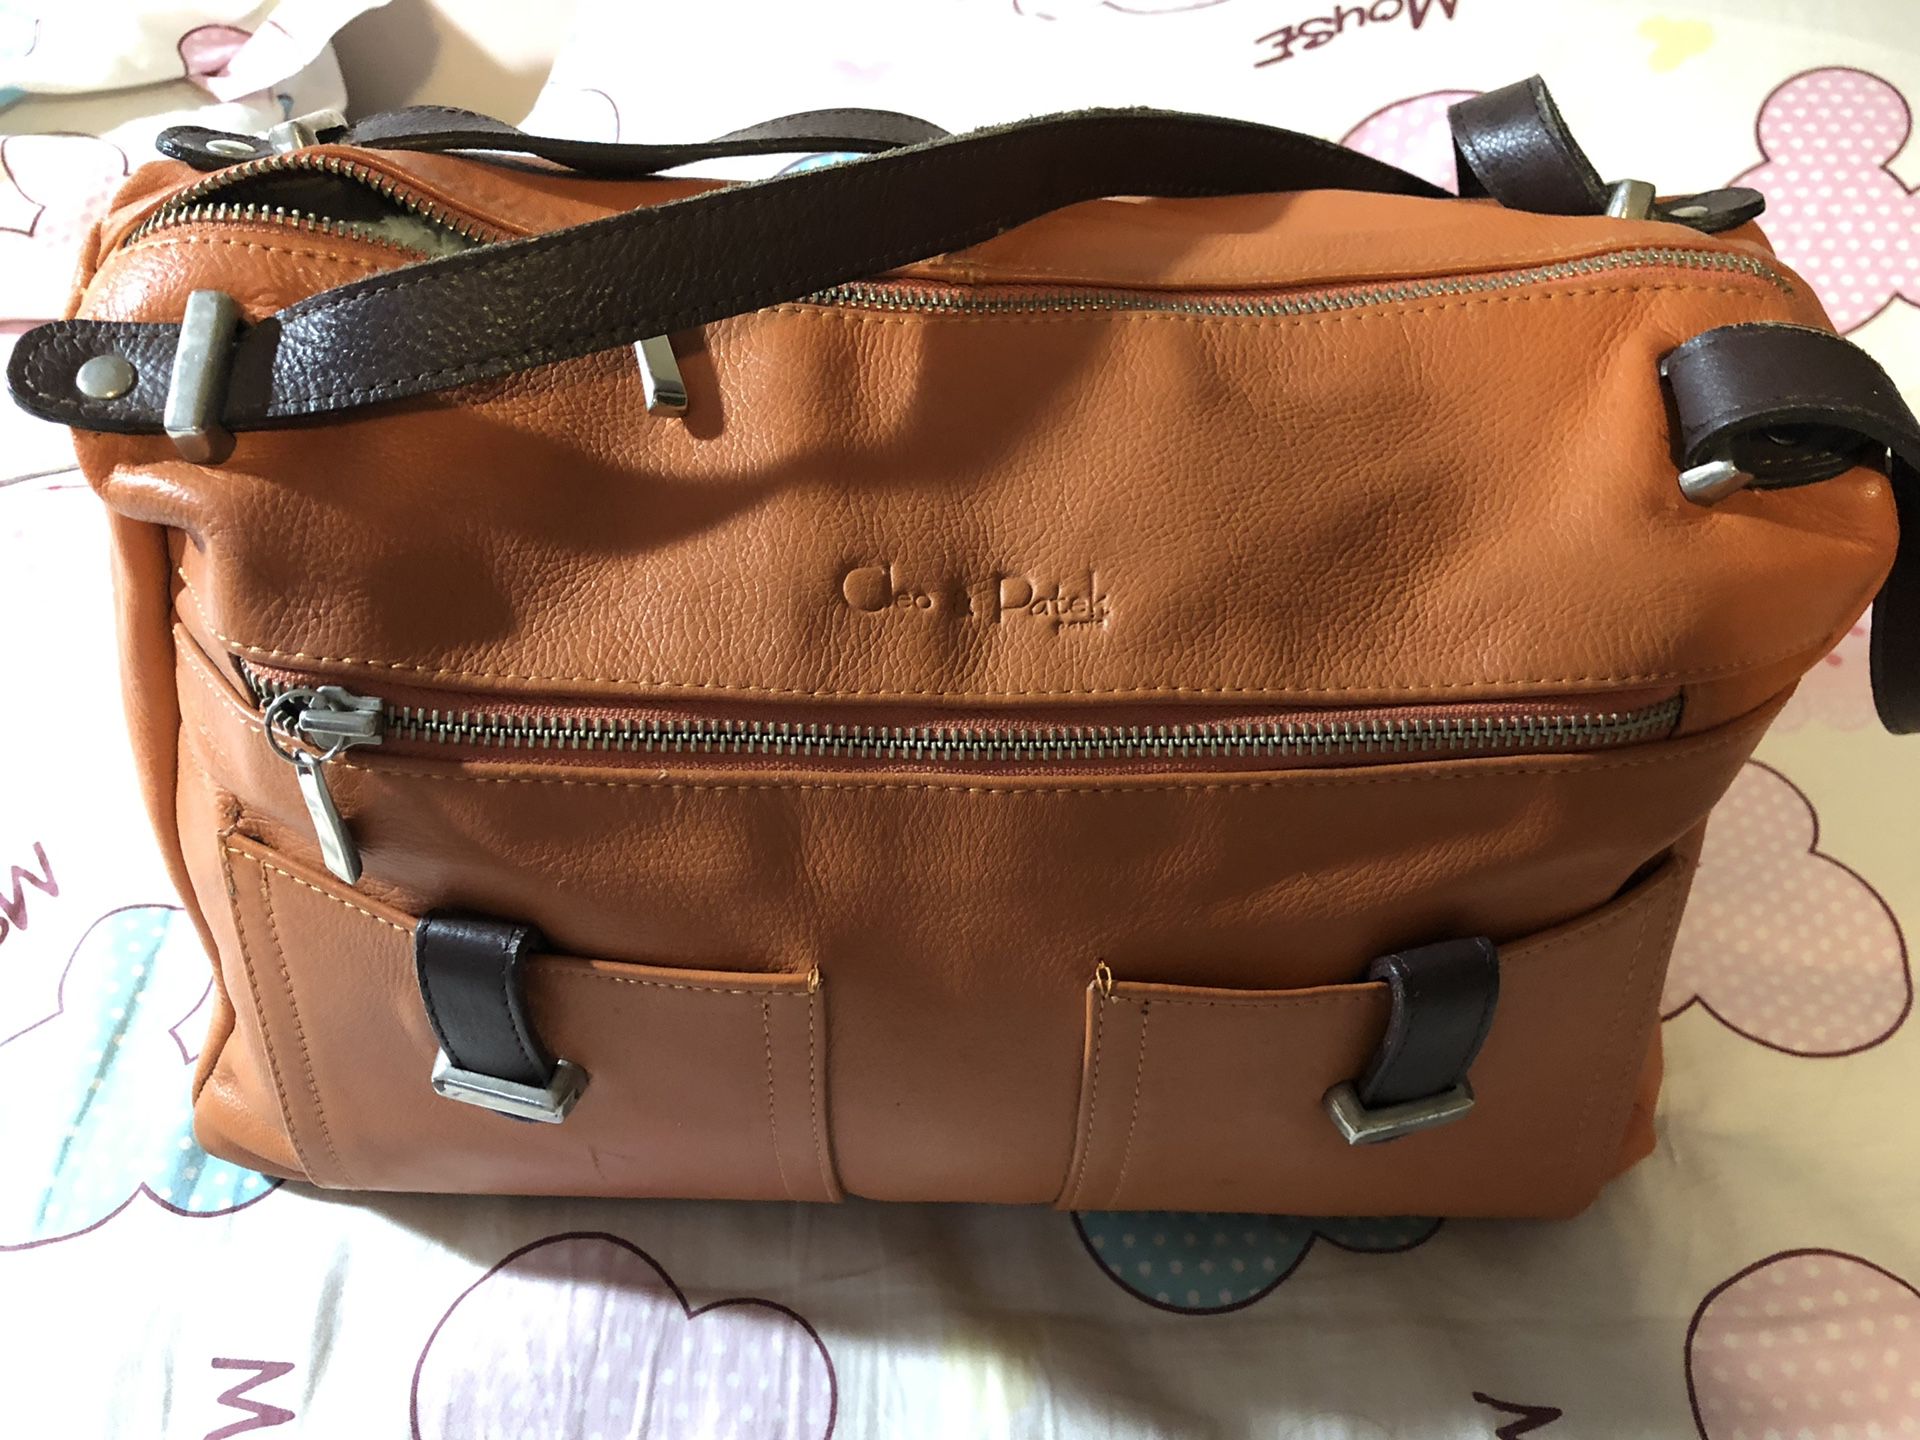 Cleo & patek leather handbag